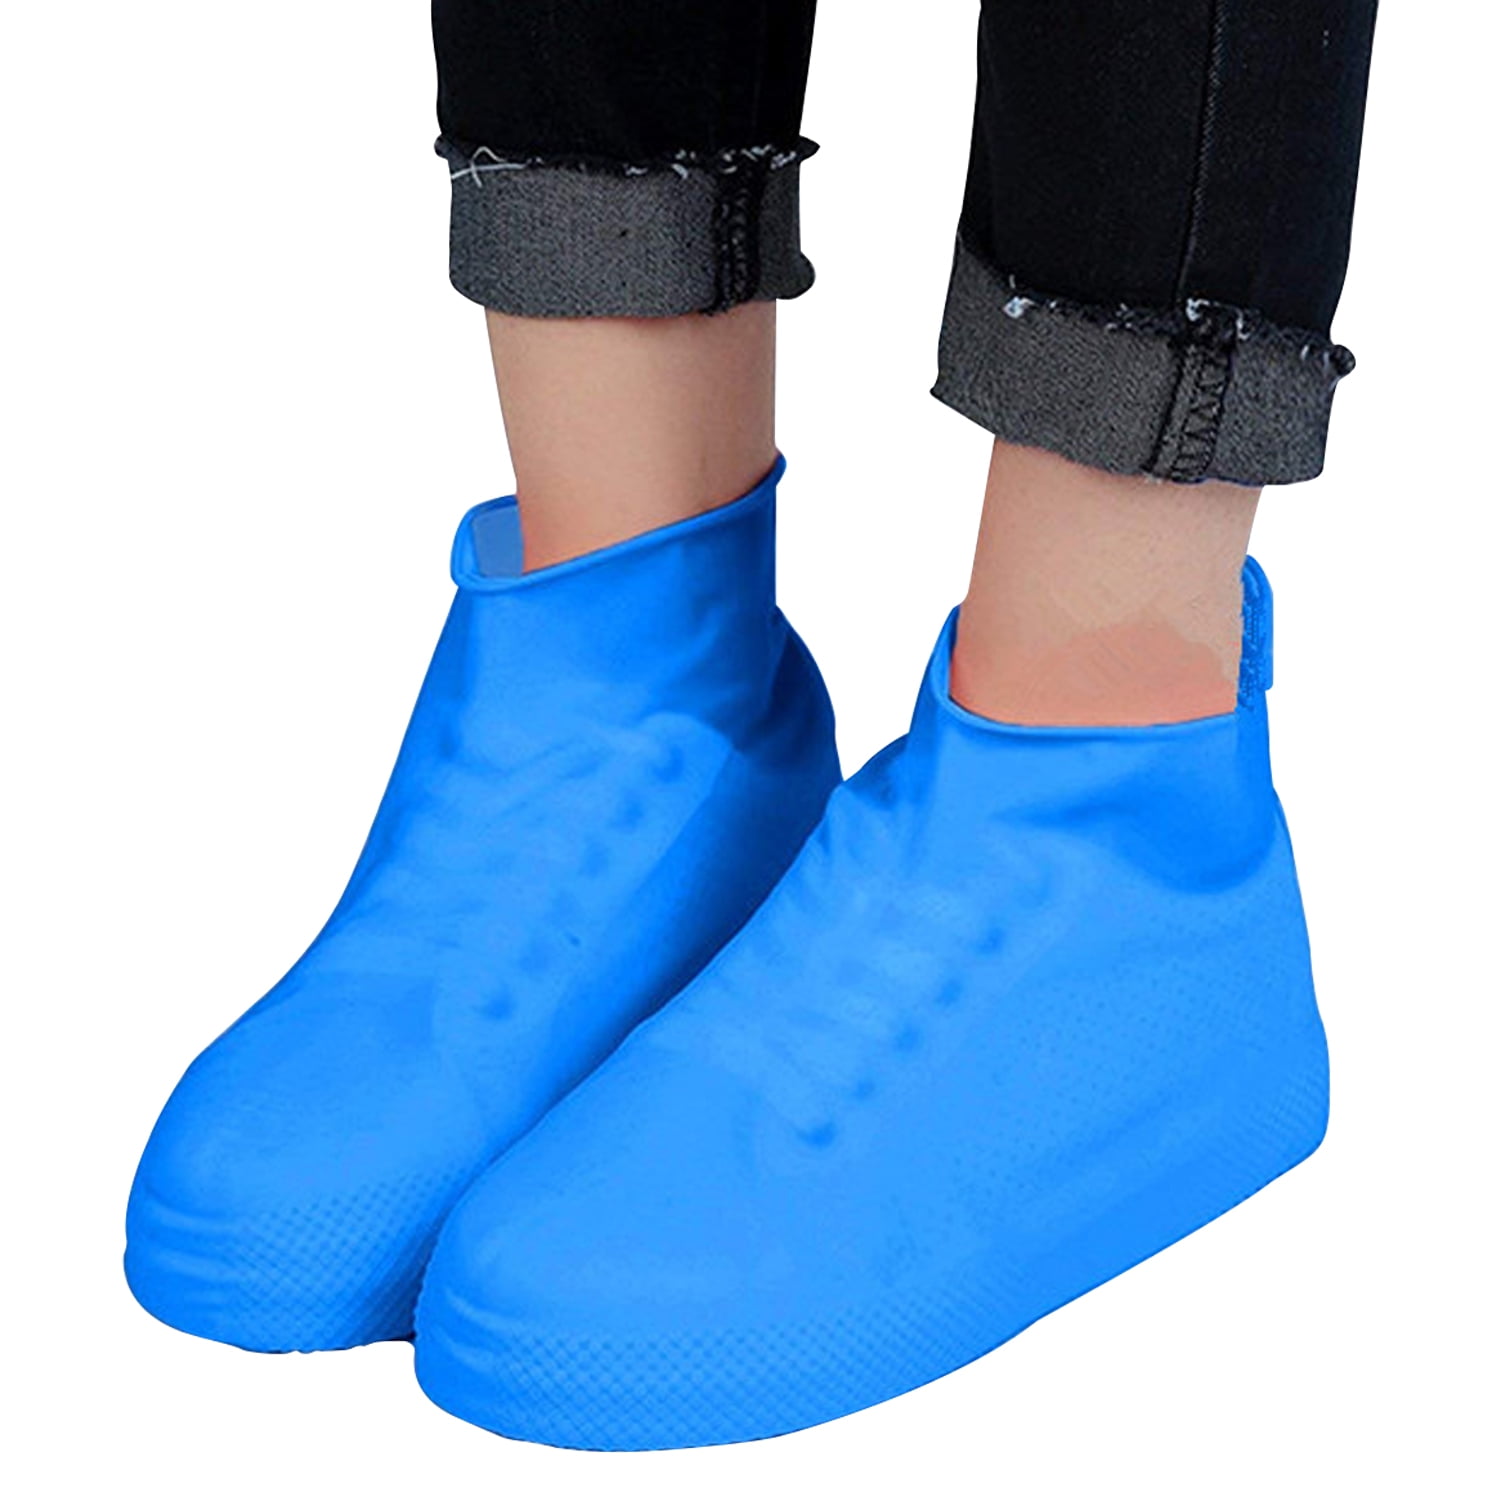 Details about   Rainproof Shoes Cover Waterproof Reusable Shoe Covers 